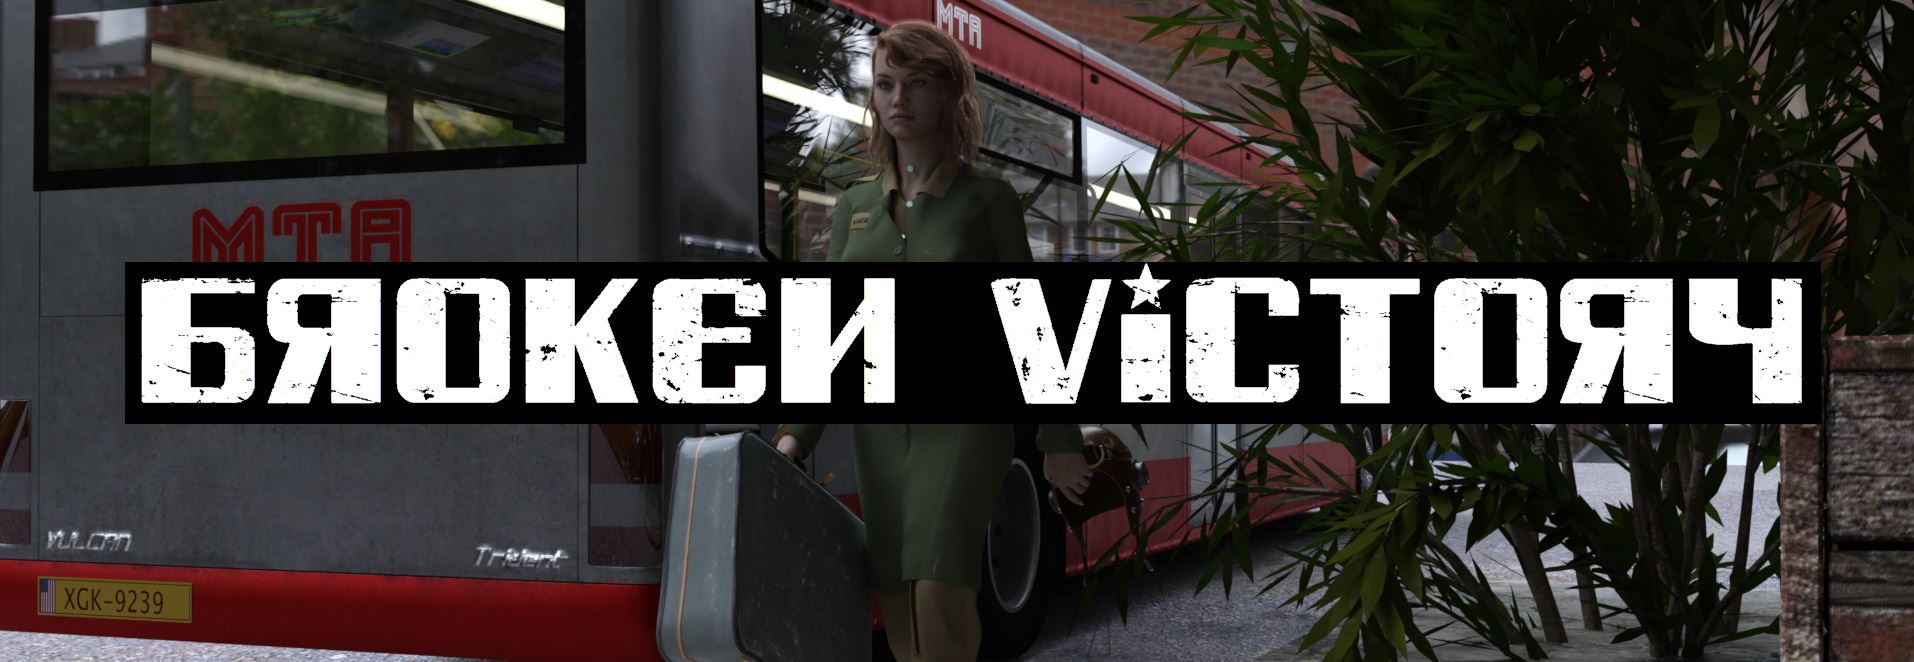 Broken Victory porn xxx game download cover